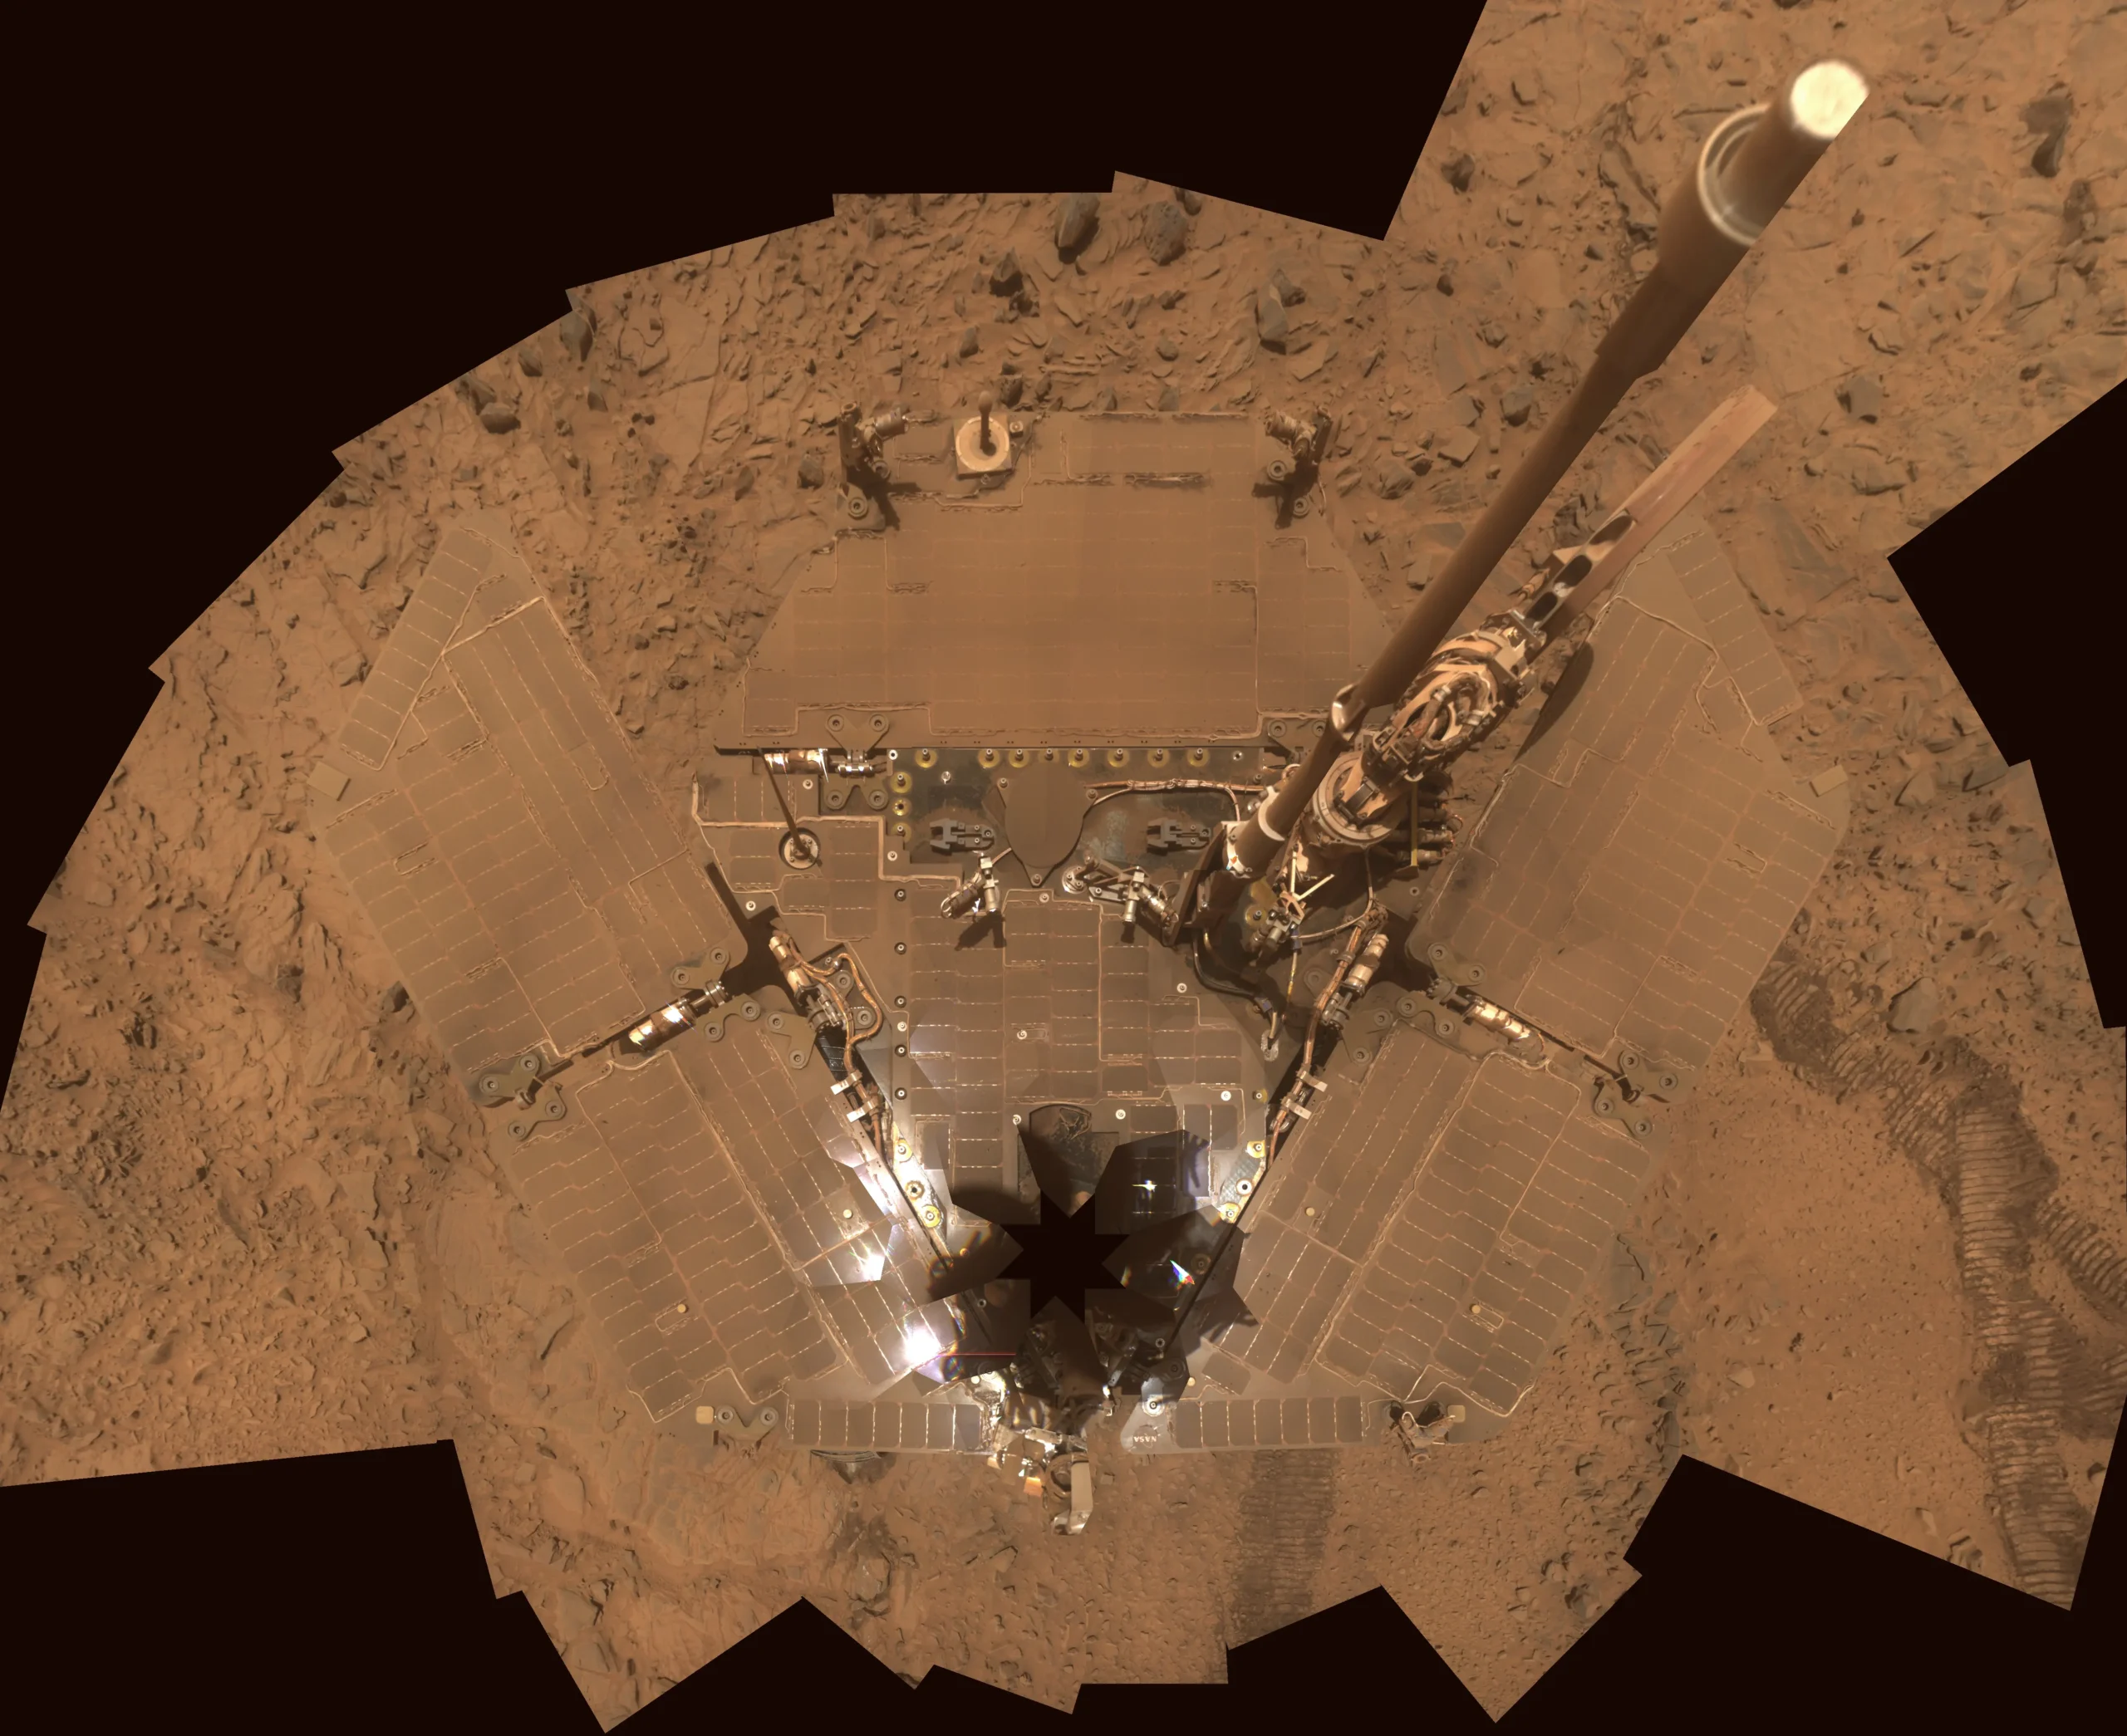 curiosity rover solar panels - Does the Curiosity rover have solar panels